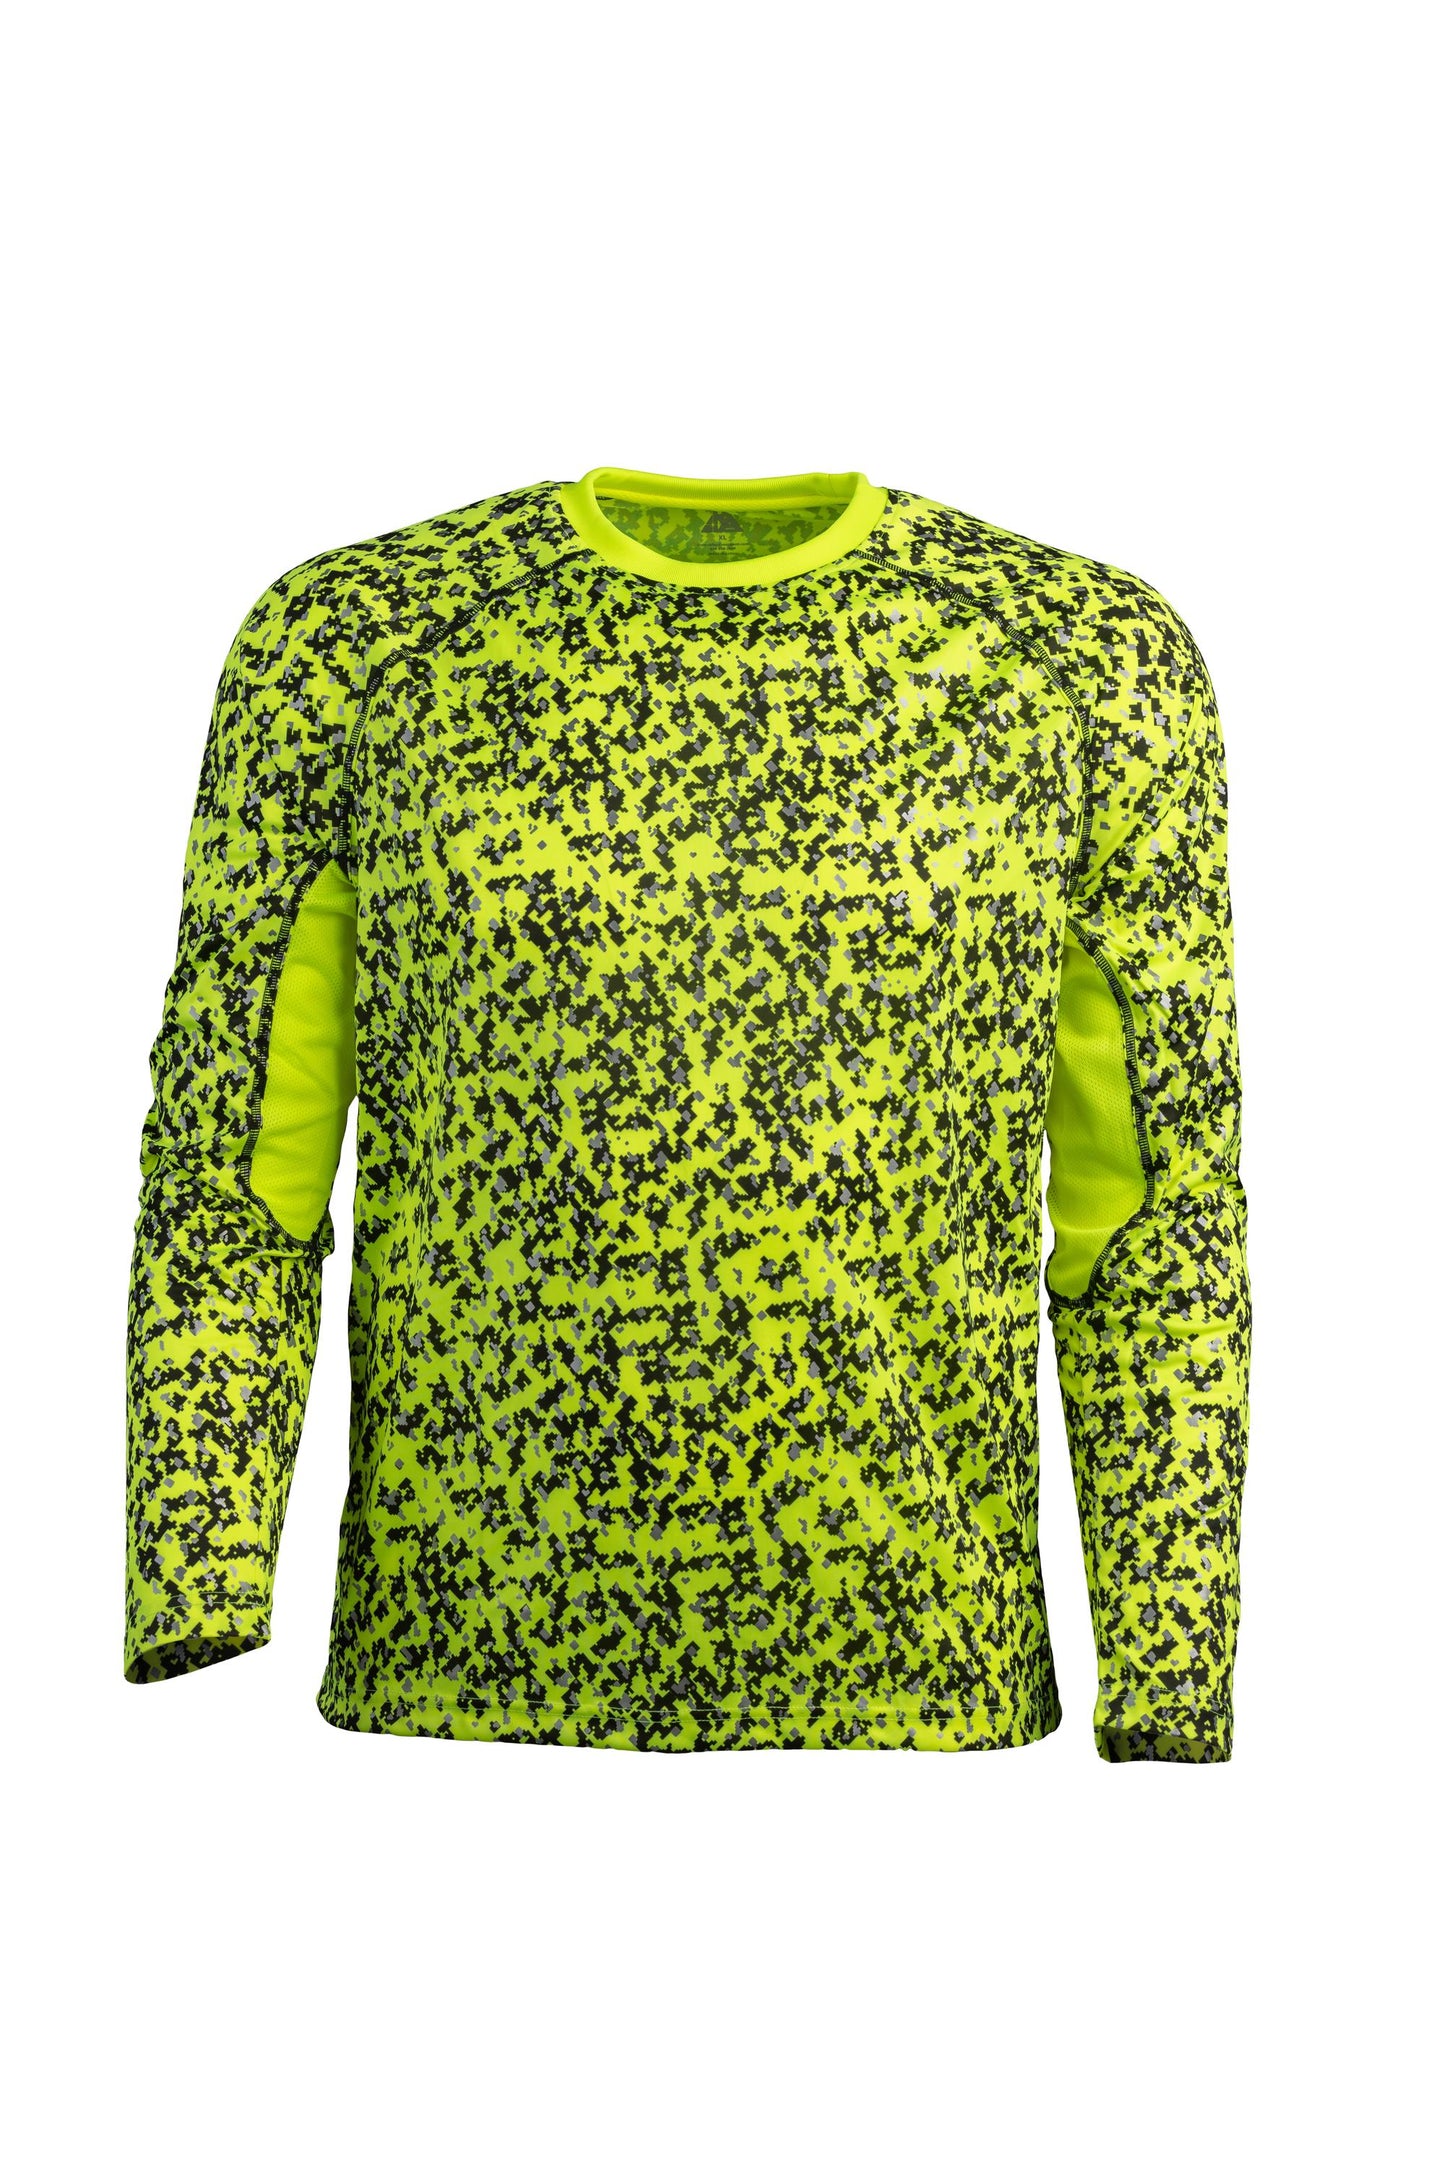 Men’s Lime-Black Camo Long Sleeve WildSpark™ Athletic Shirt